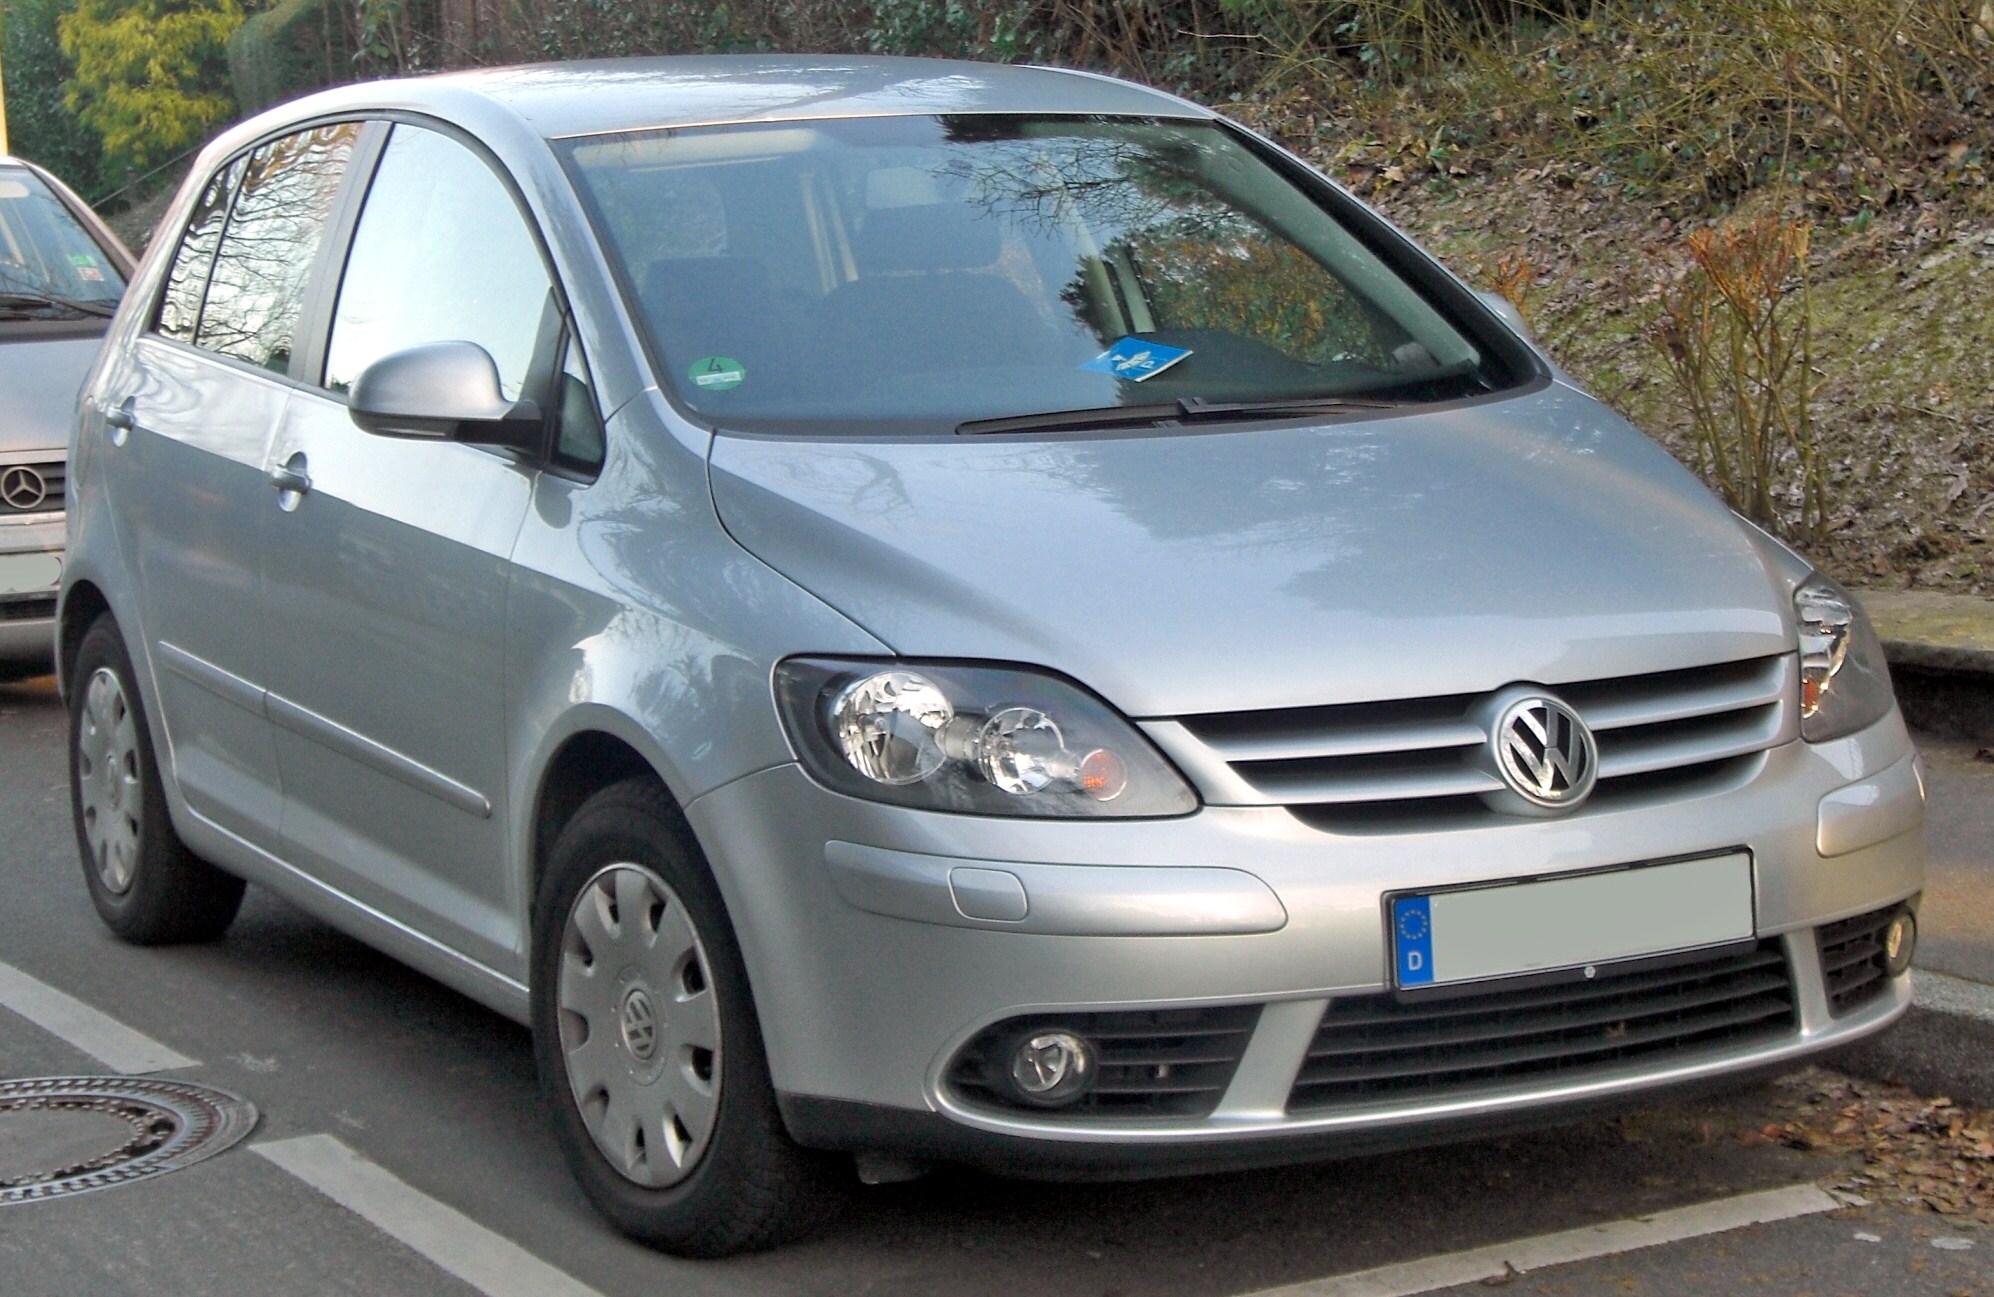 File:VW Plus front.JPG Wikimedia Commons